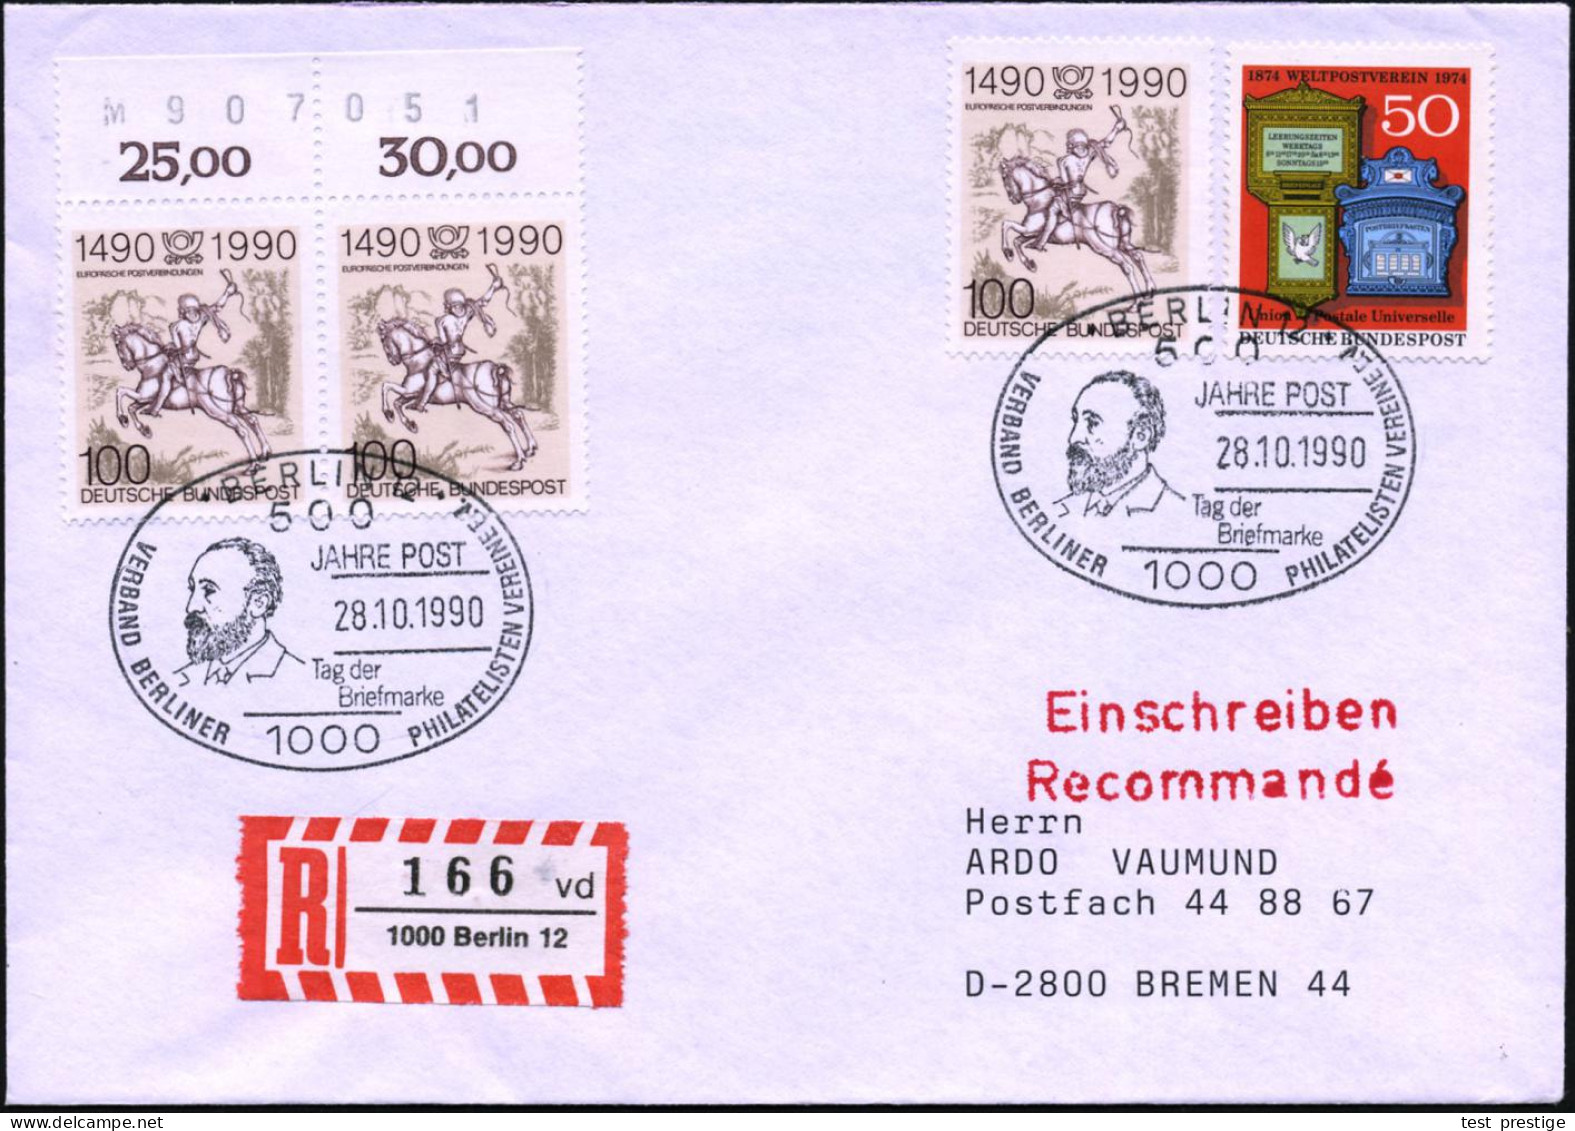 1000 BERLIN 12/ 500 JAHRE POST/ Tag Der/ Briefmarke.. 1990 (28.10.) SSt = Heinr. V.Stephan 2x Auf 50 Pf. UPU + 3x 100 Pf - UPU (Universal Postal Union)